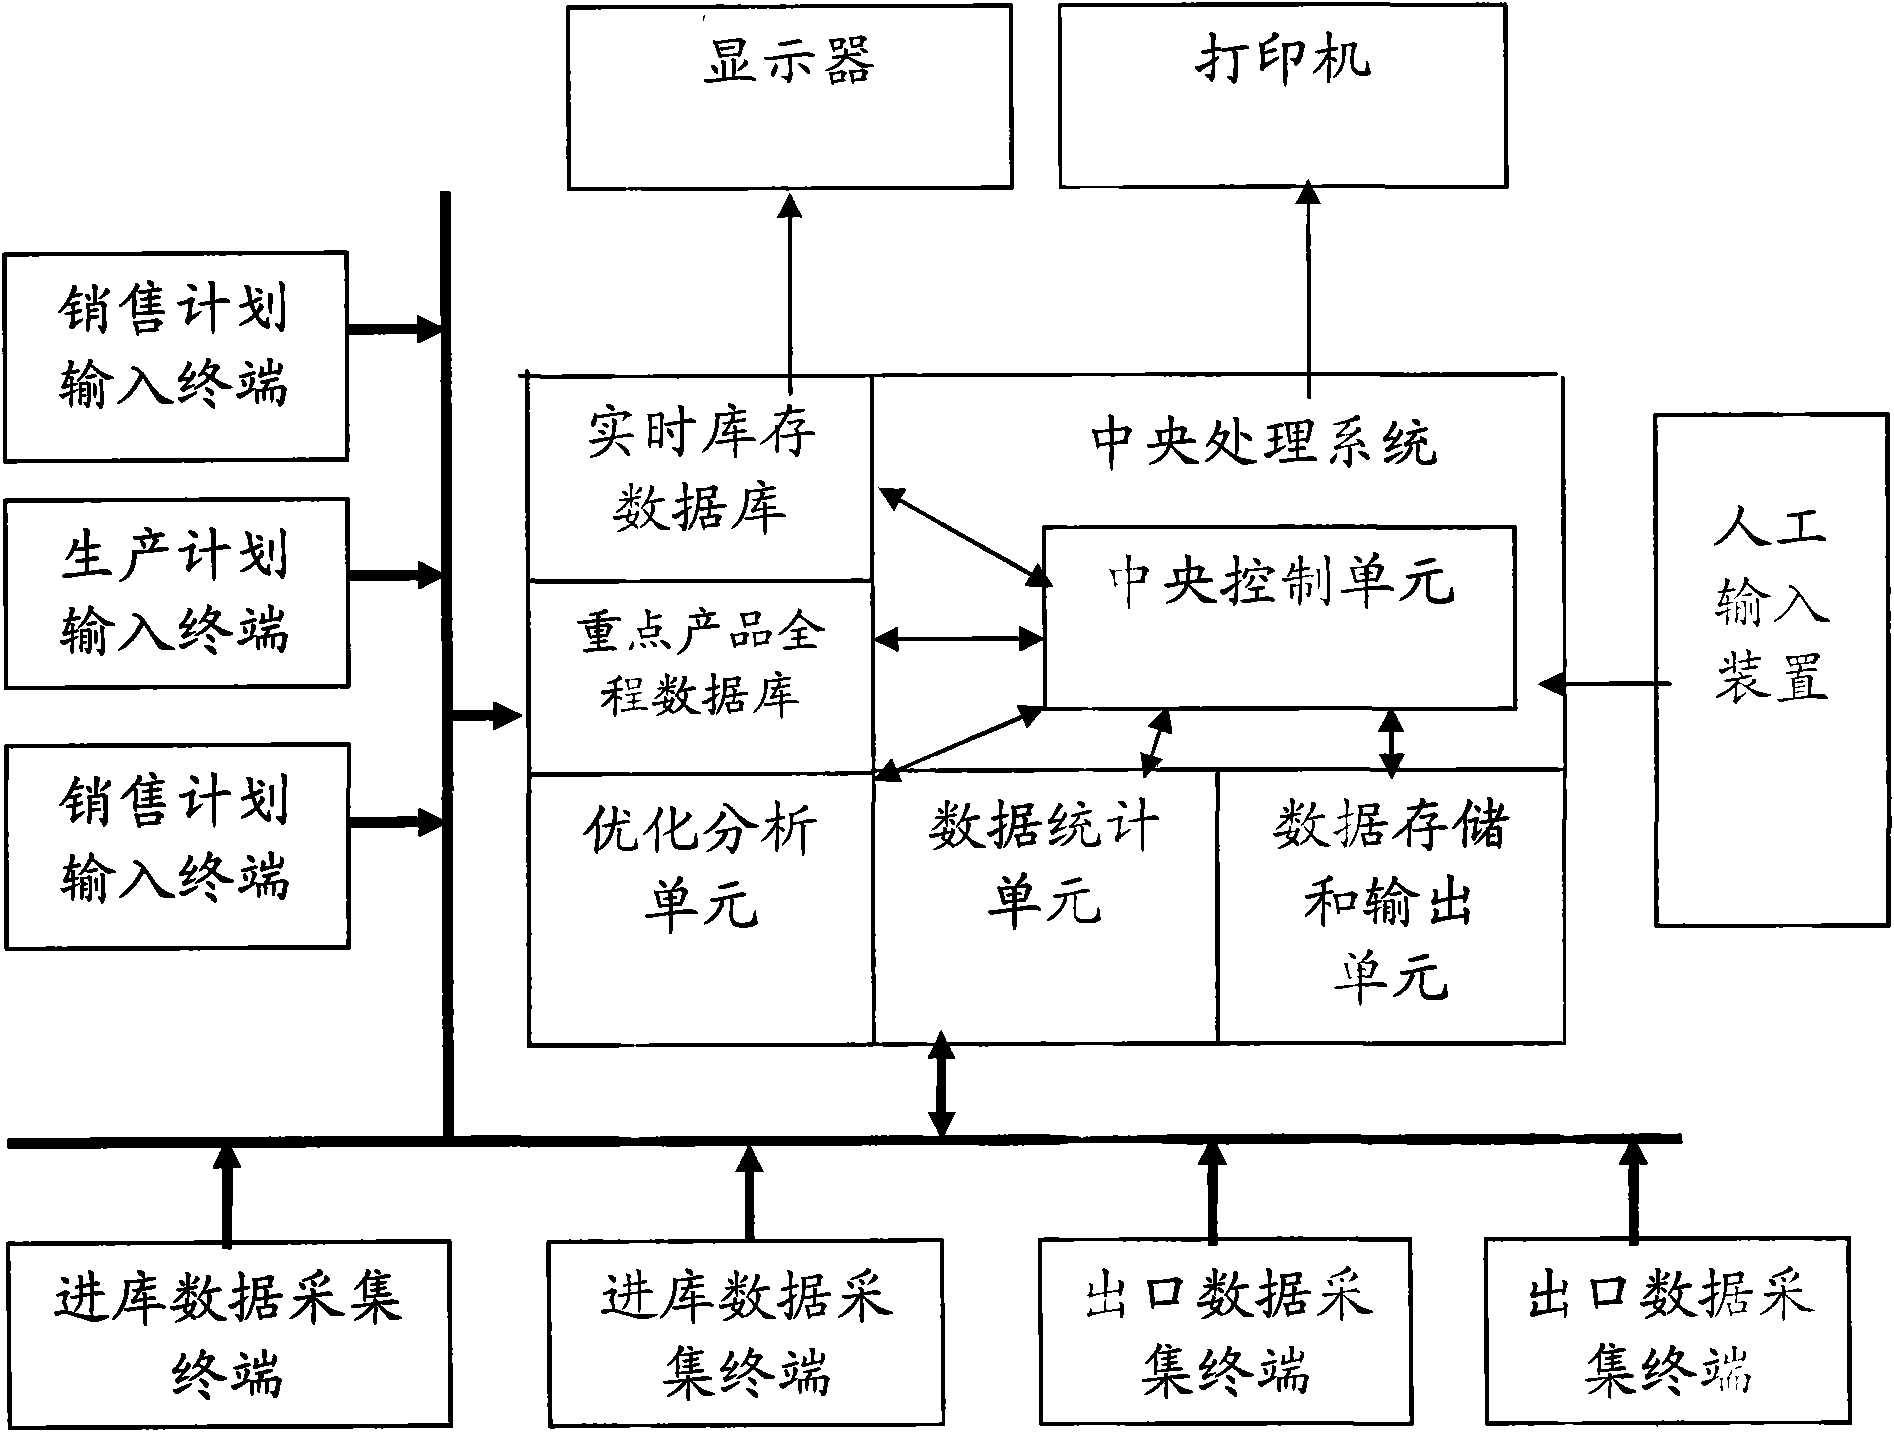 Computer operation management system of production enterprises